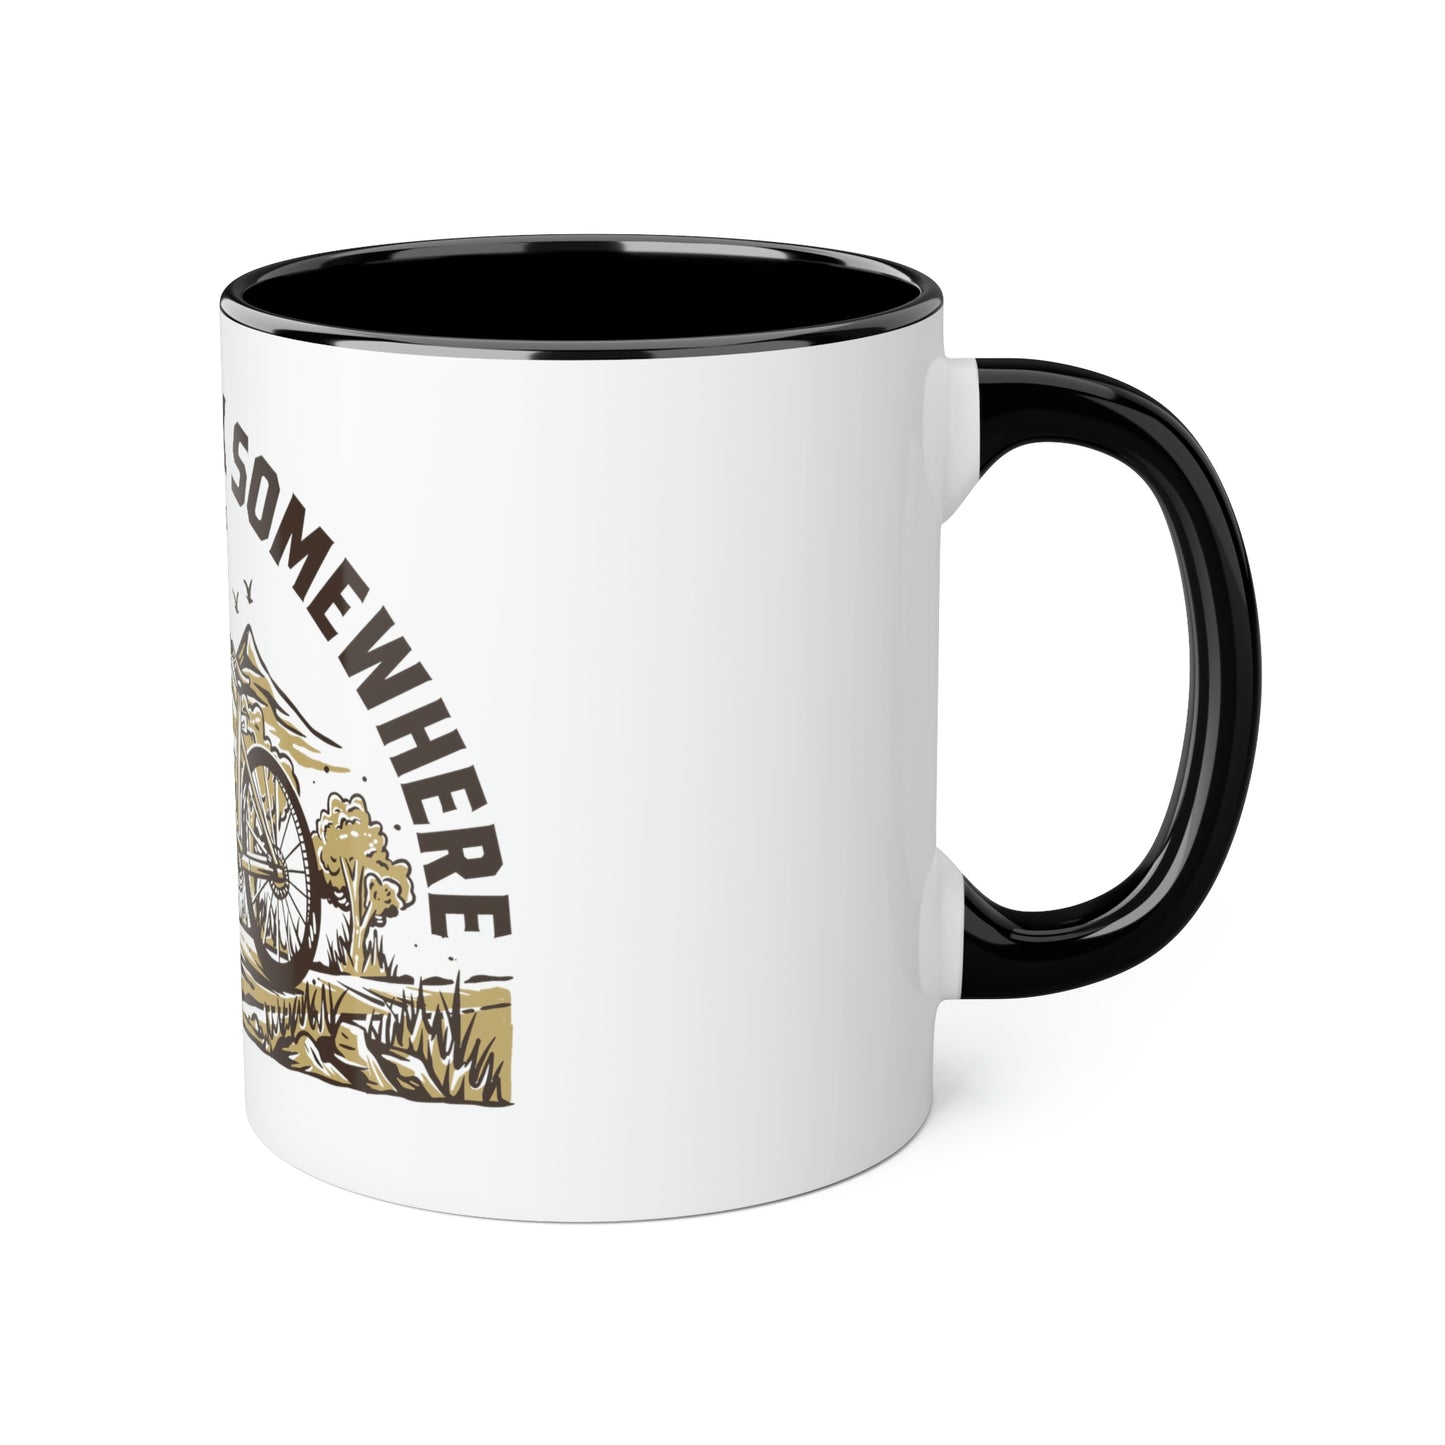 2023 529 Garage Limited Edition "It's ride o'clock somewhere" Coffee Mug